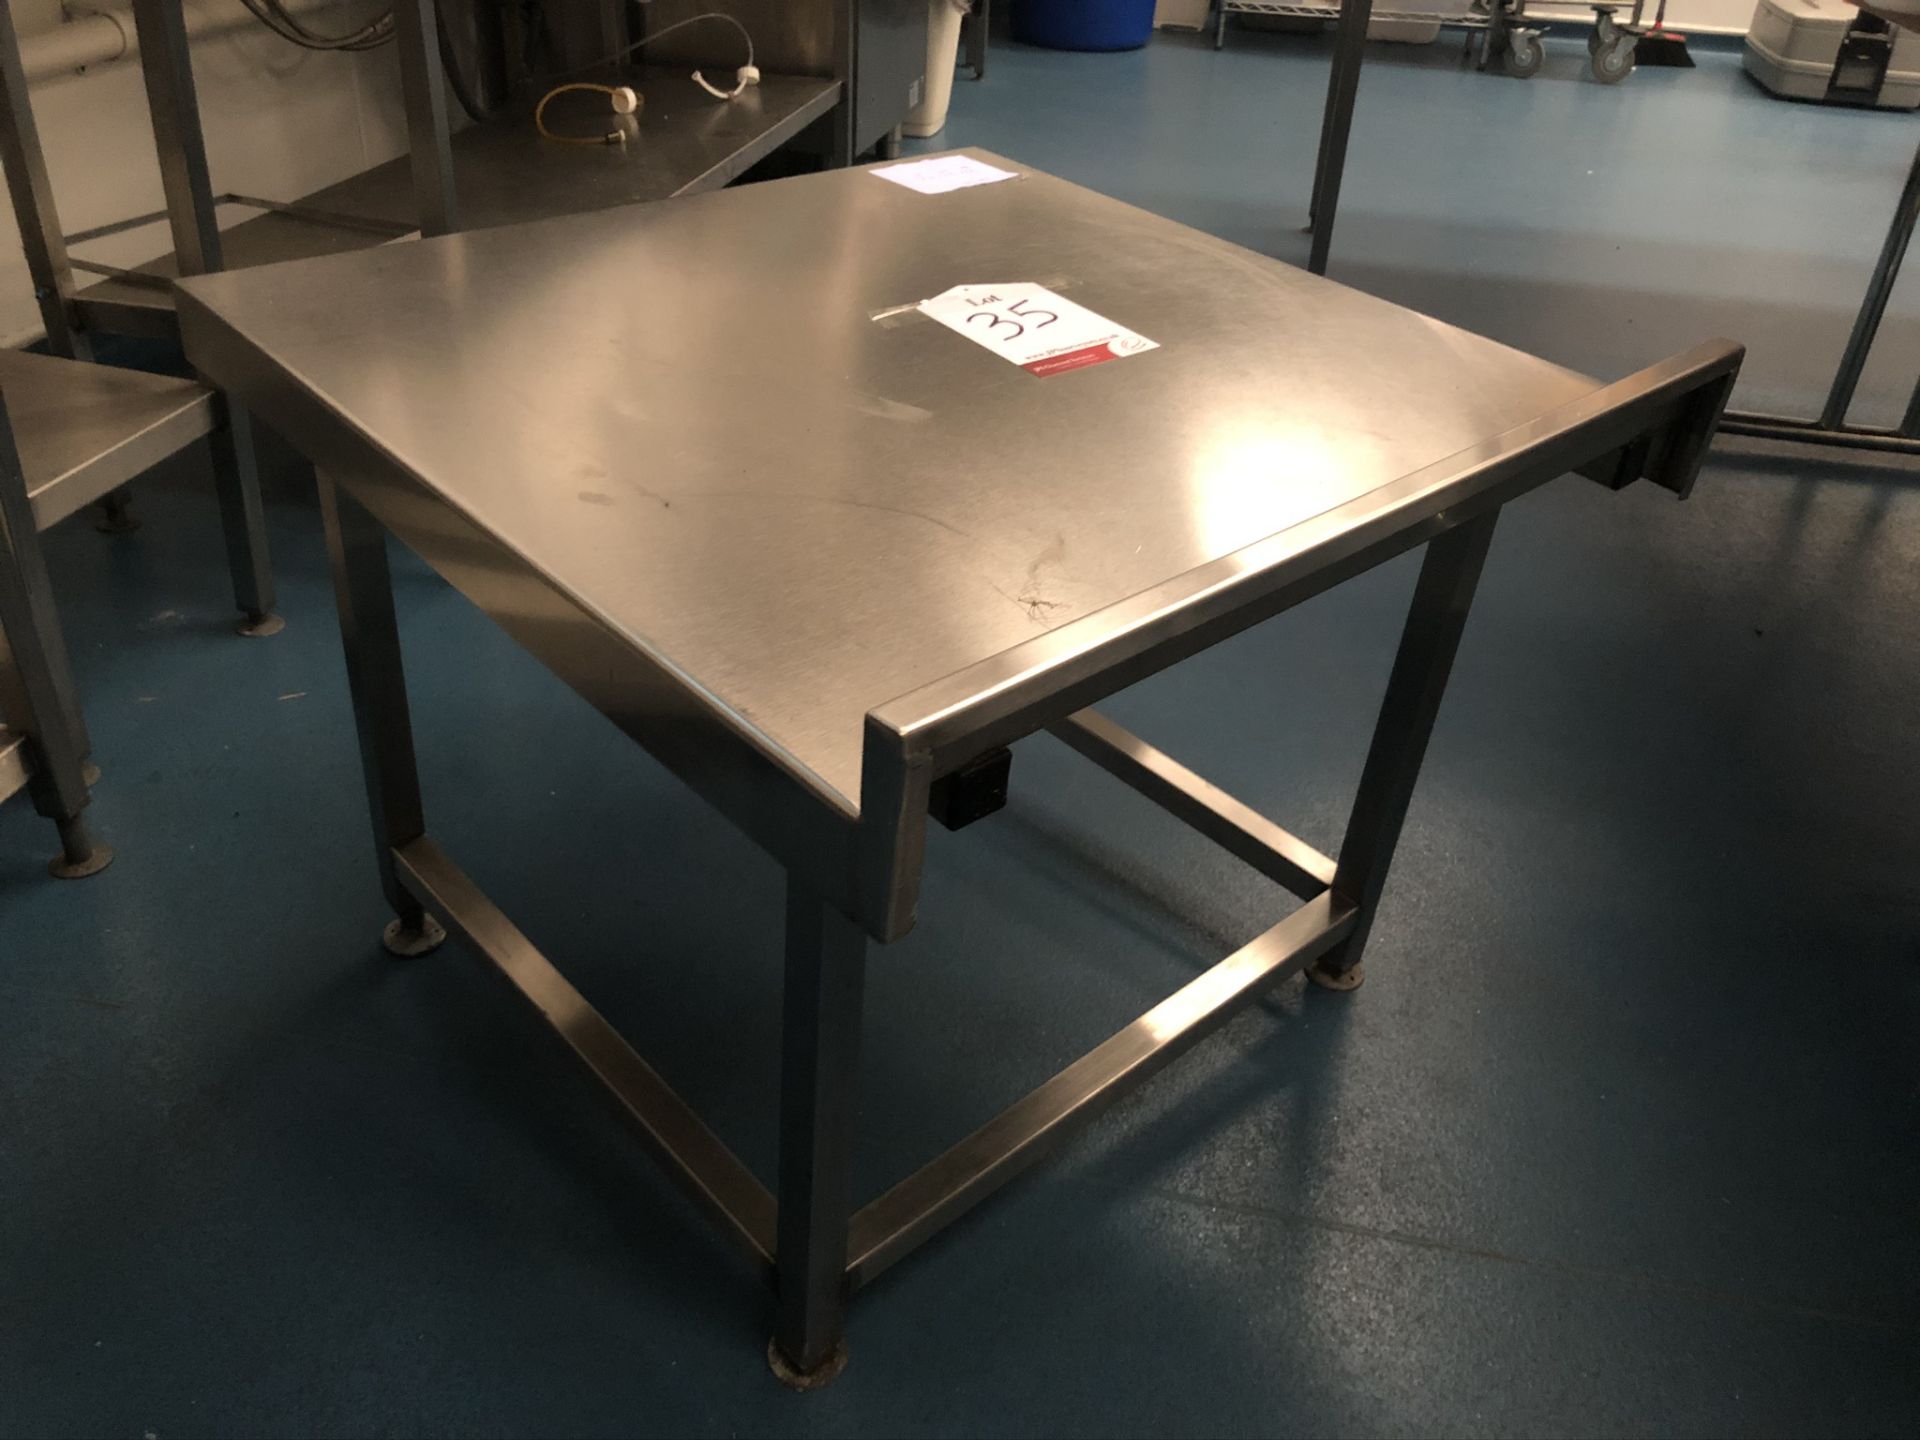 Stainless Steel Preparation Table | 70cm x 70cm x 60cm